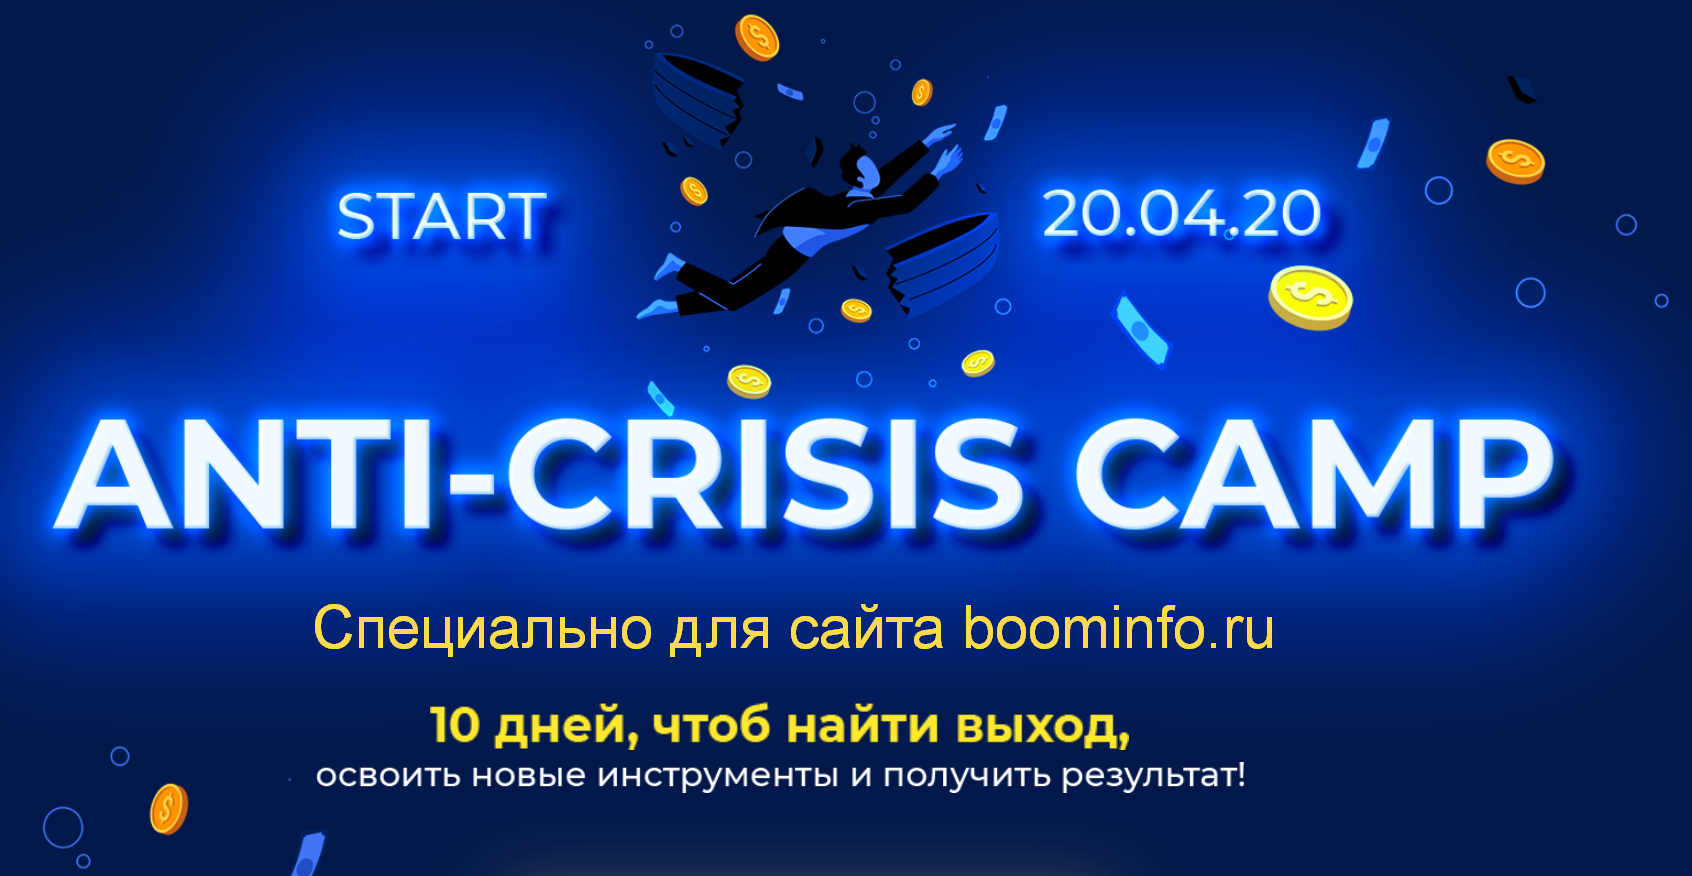 lilija-nilova-anti-crisis-camp-2020-png.1208